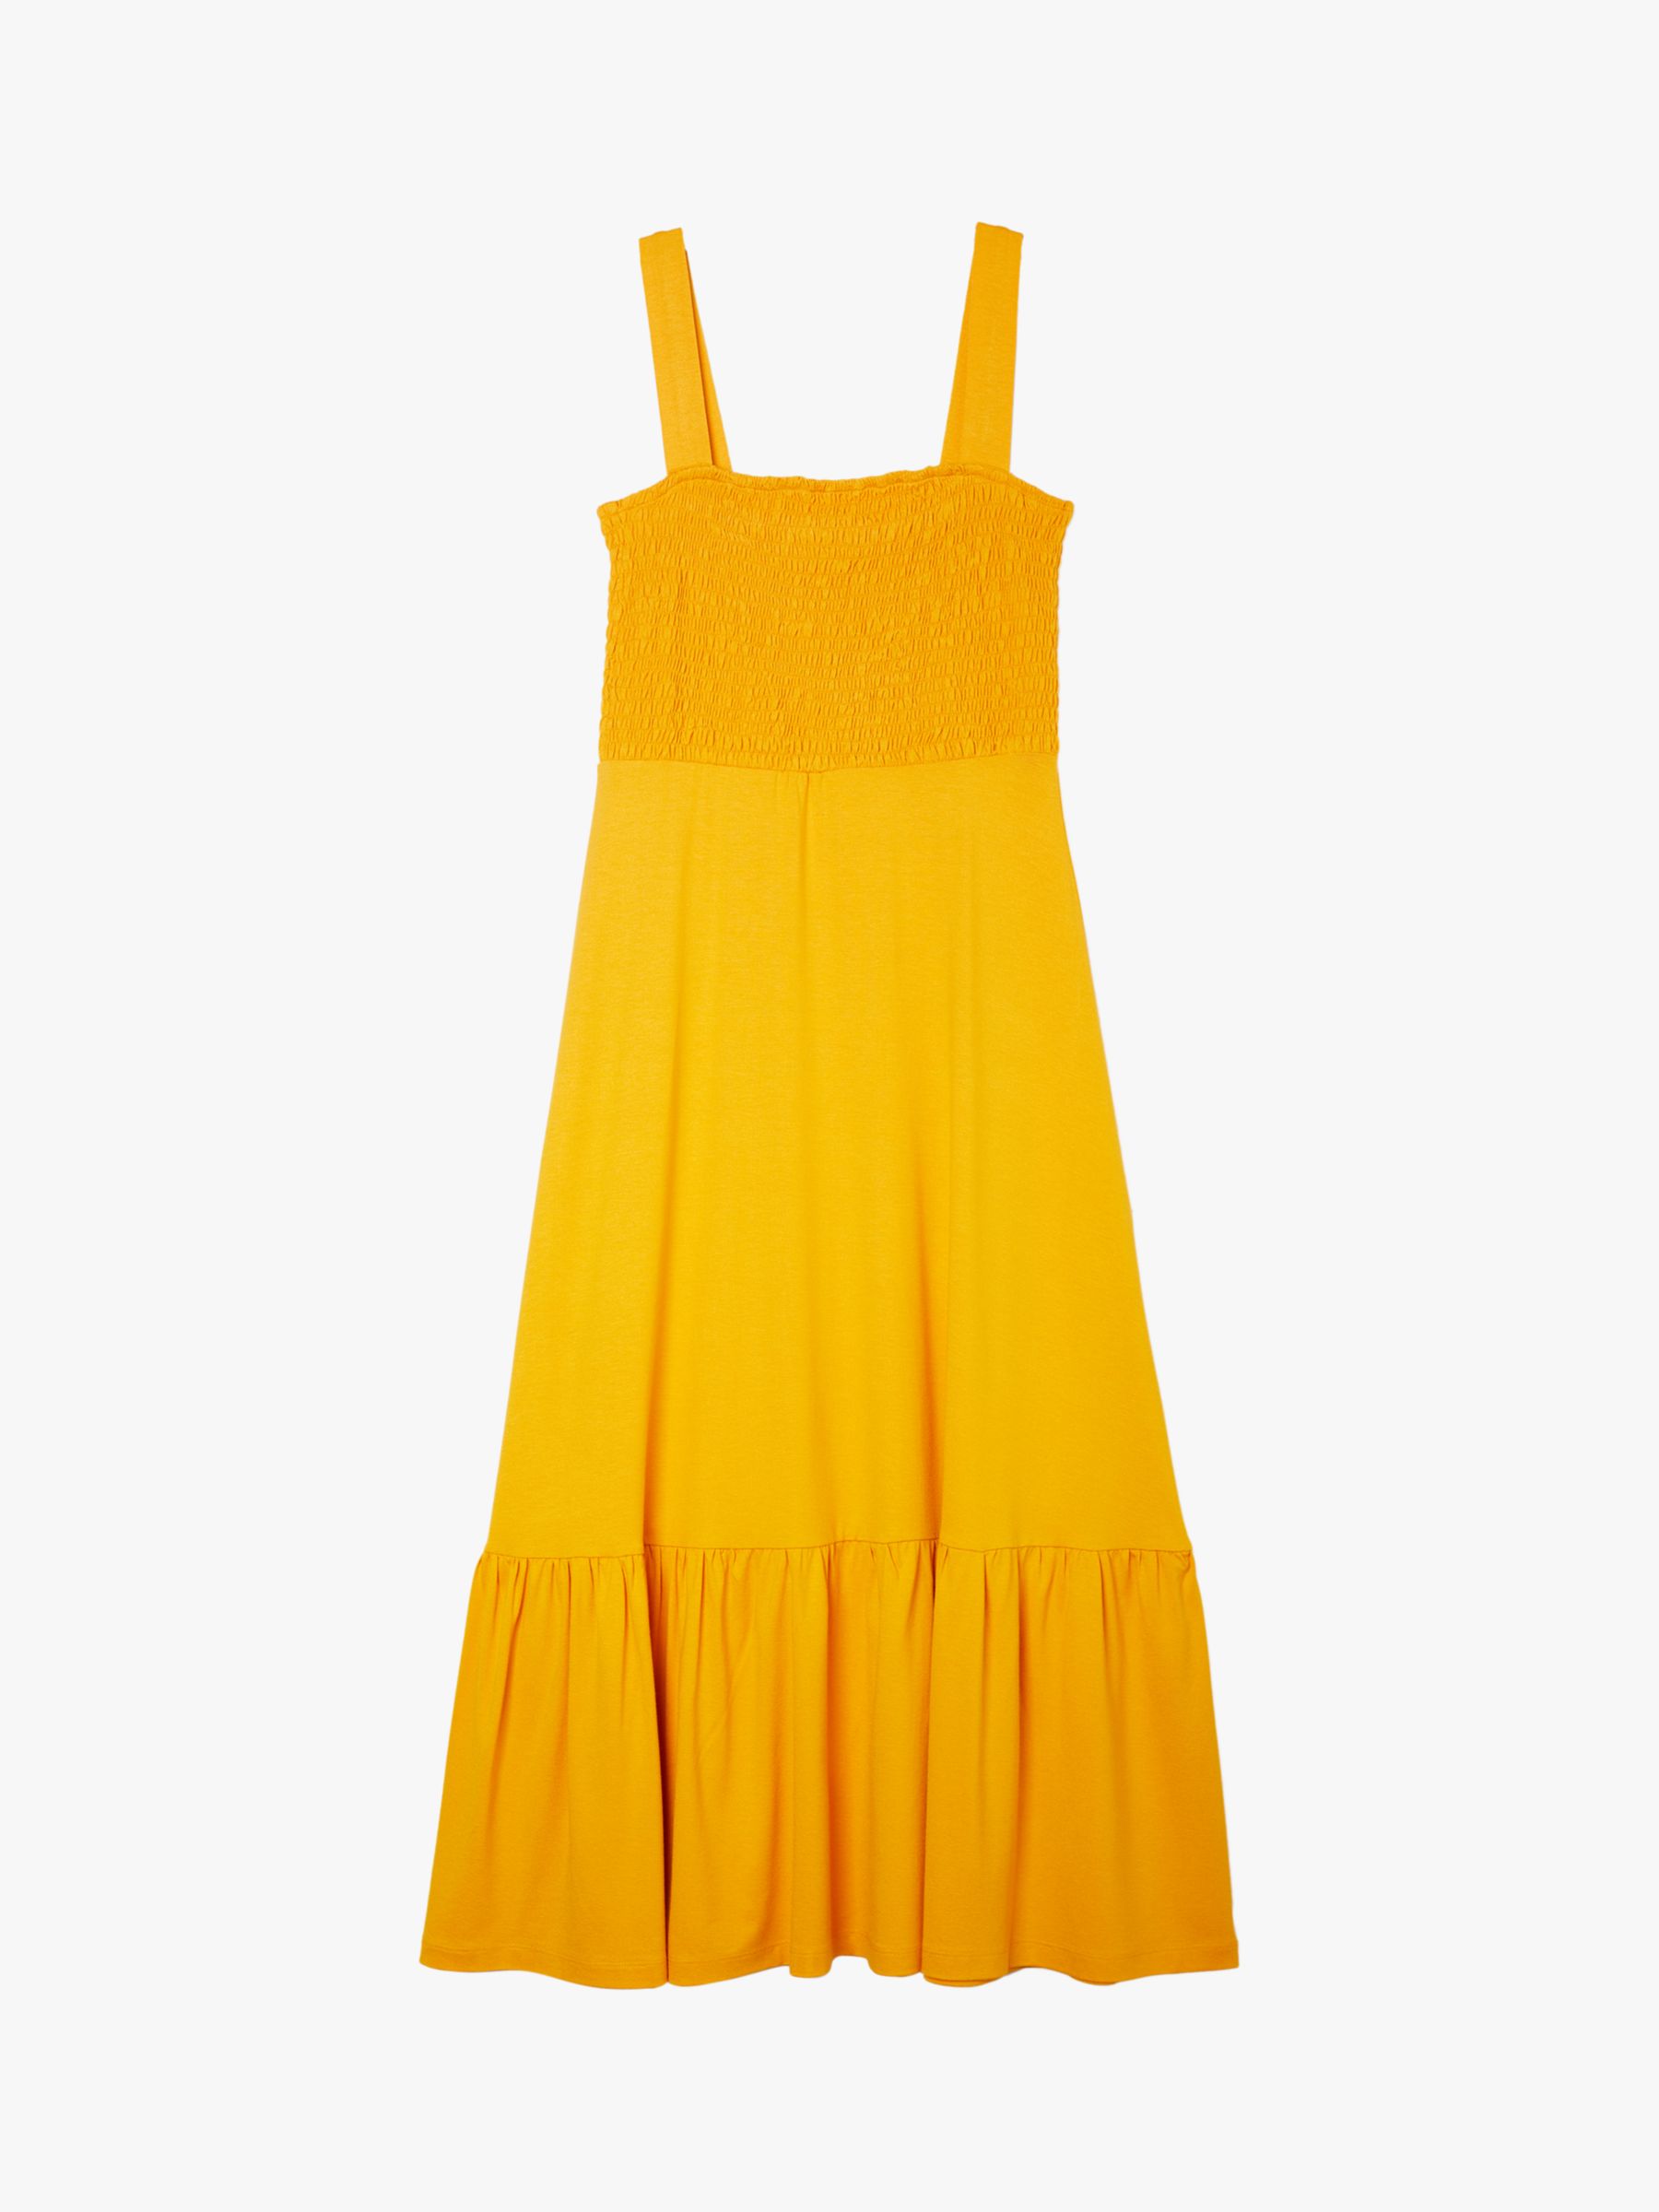 Albaray Smocked Dress, Yellow